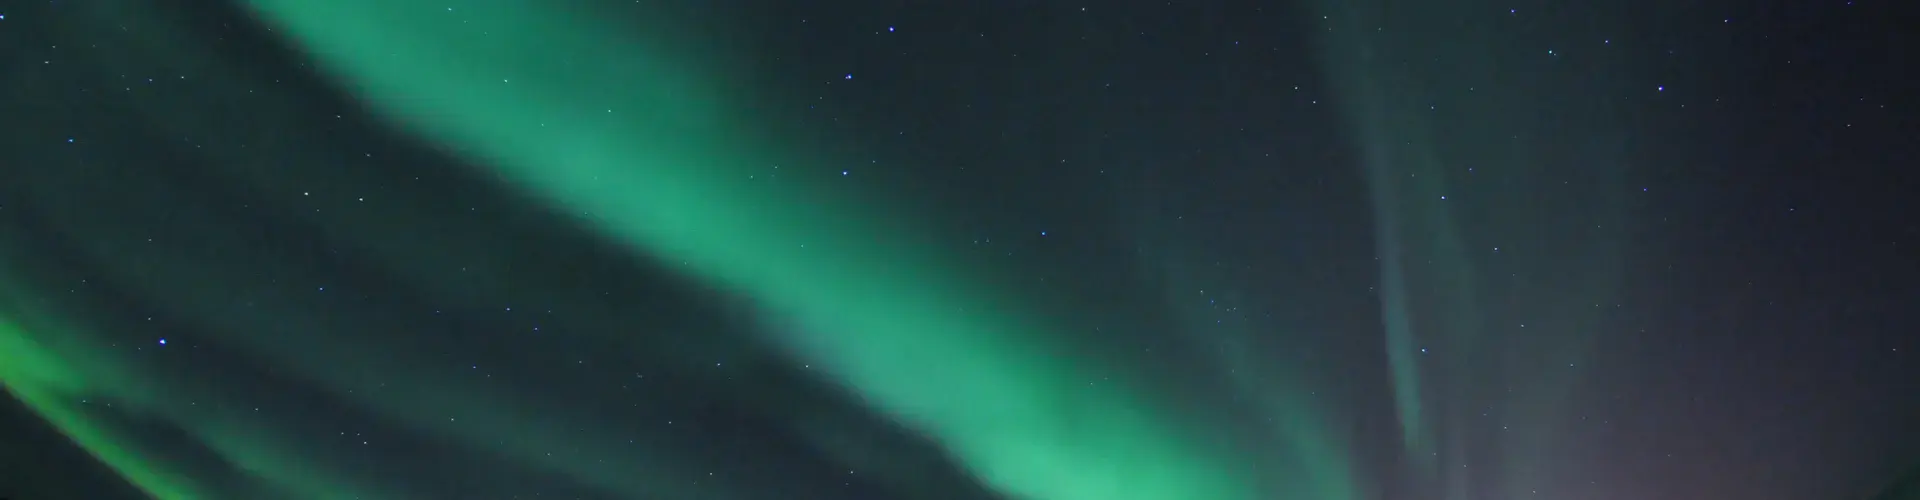 Picturing the Northern Lights. (Credit: Taro Nakai, distributed via imaggeo.egu.eu)